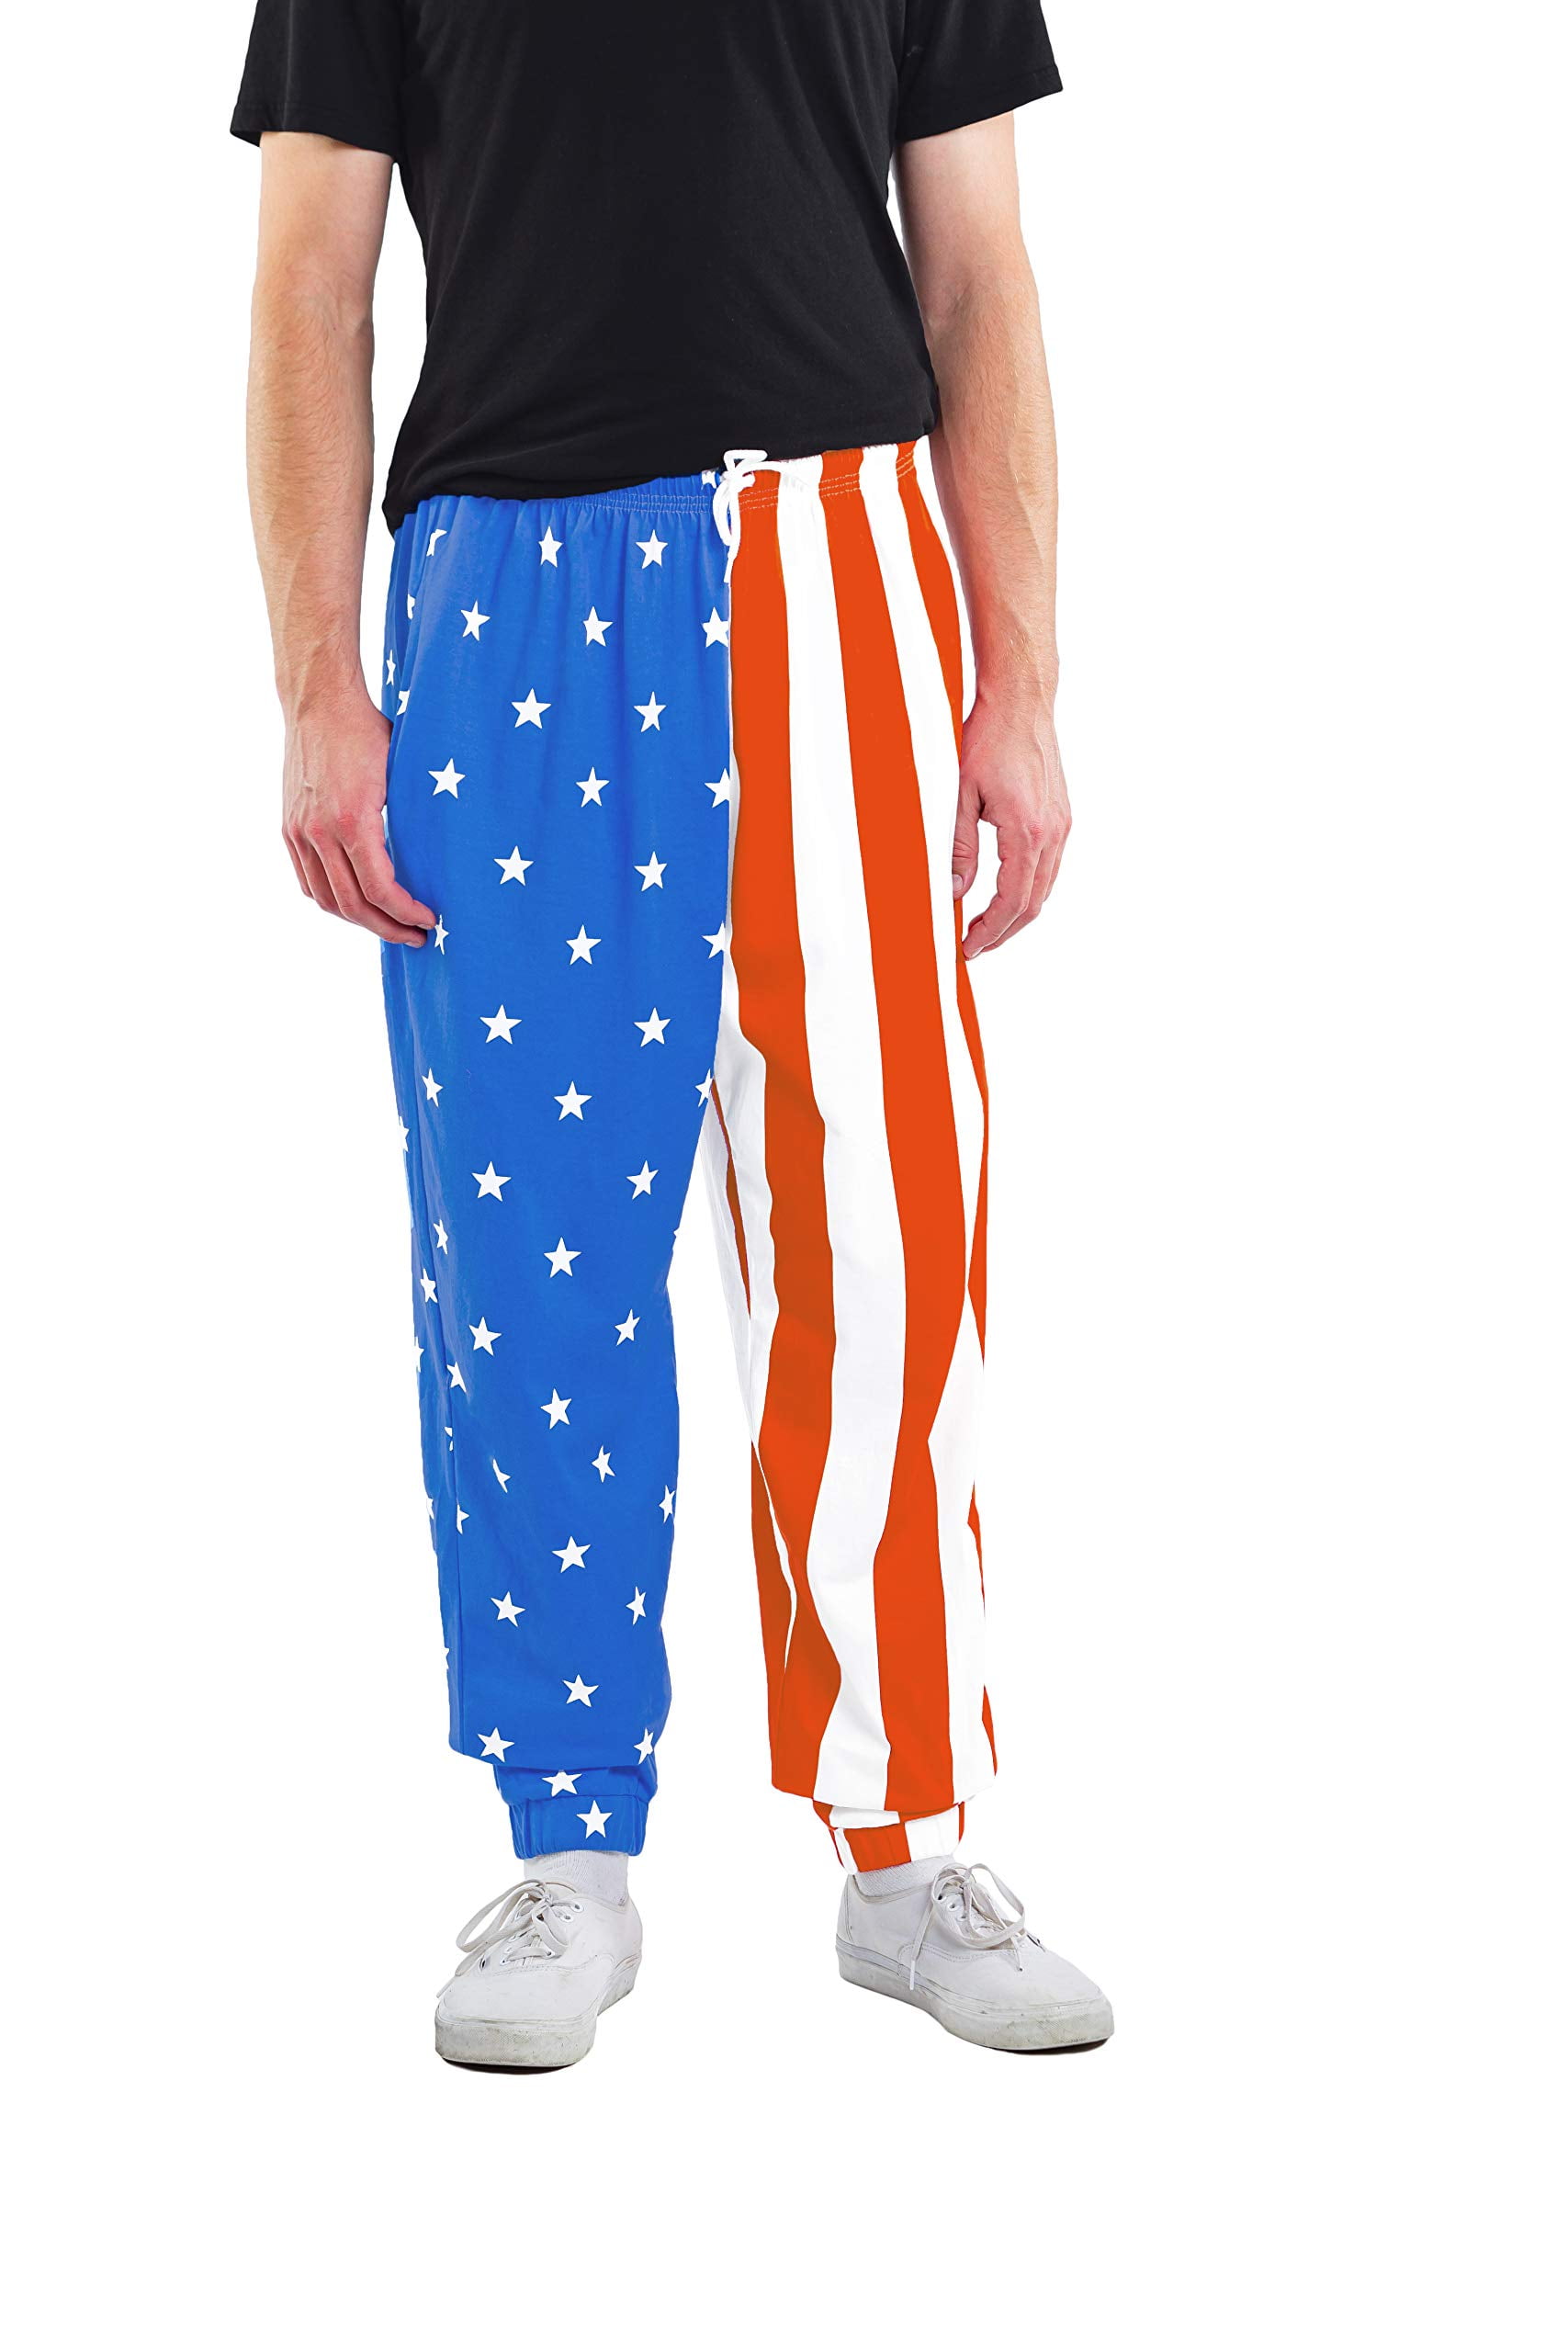 Tipsy Elves American Flag Workout Pants - USA Karate Pants Loose ...